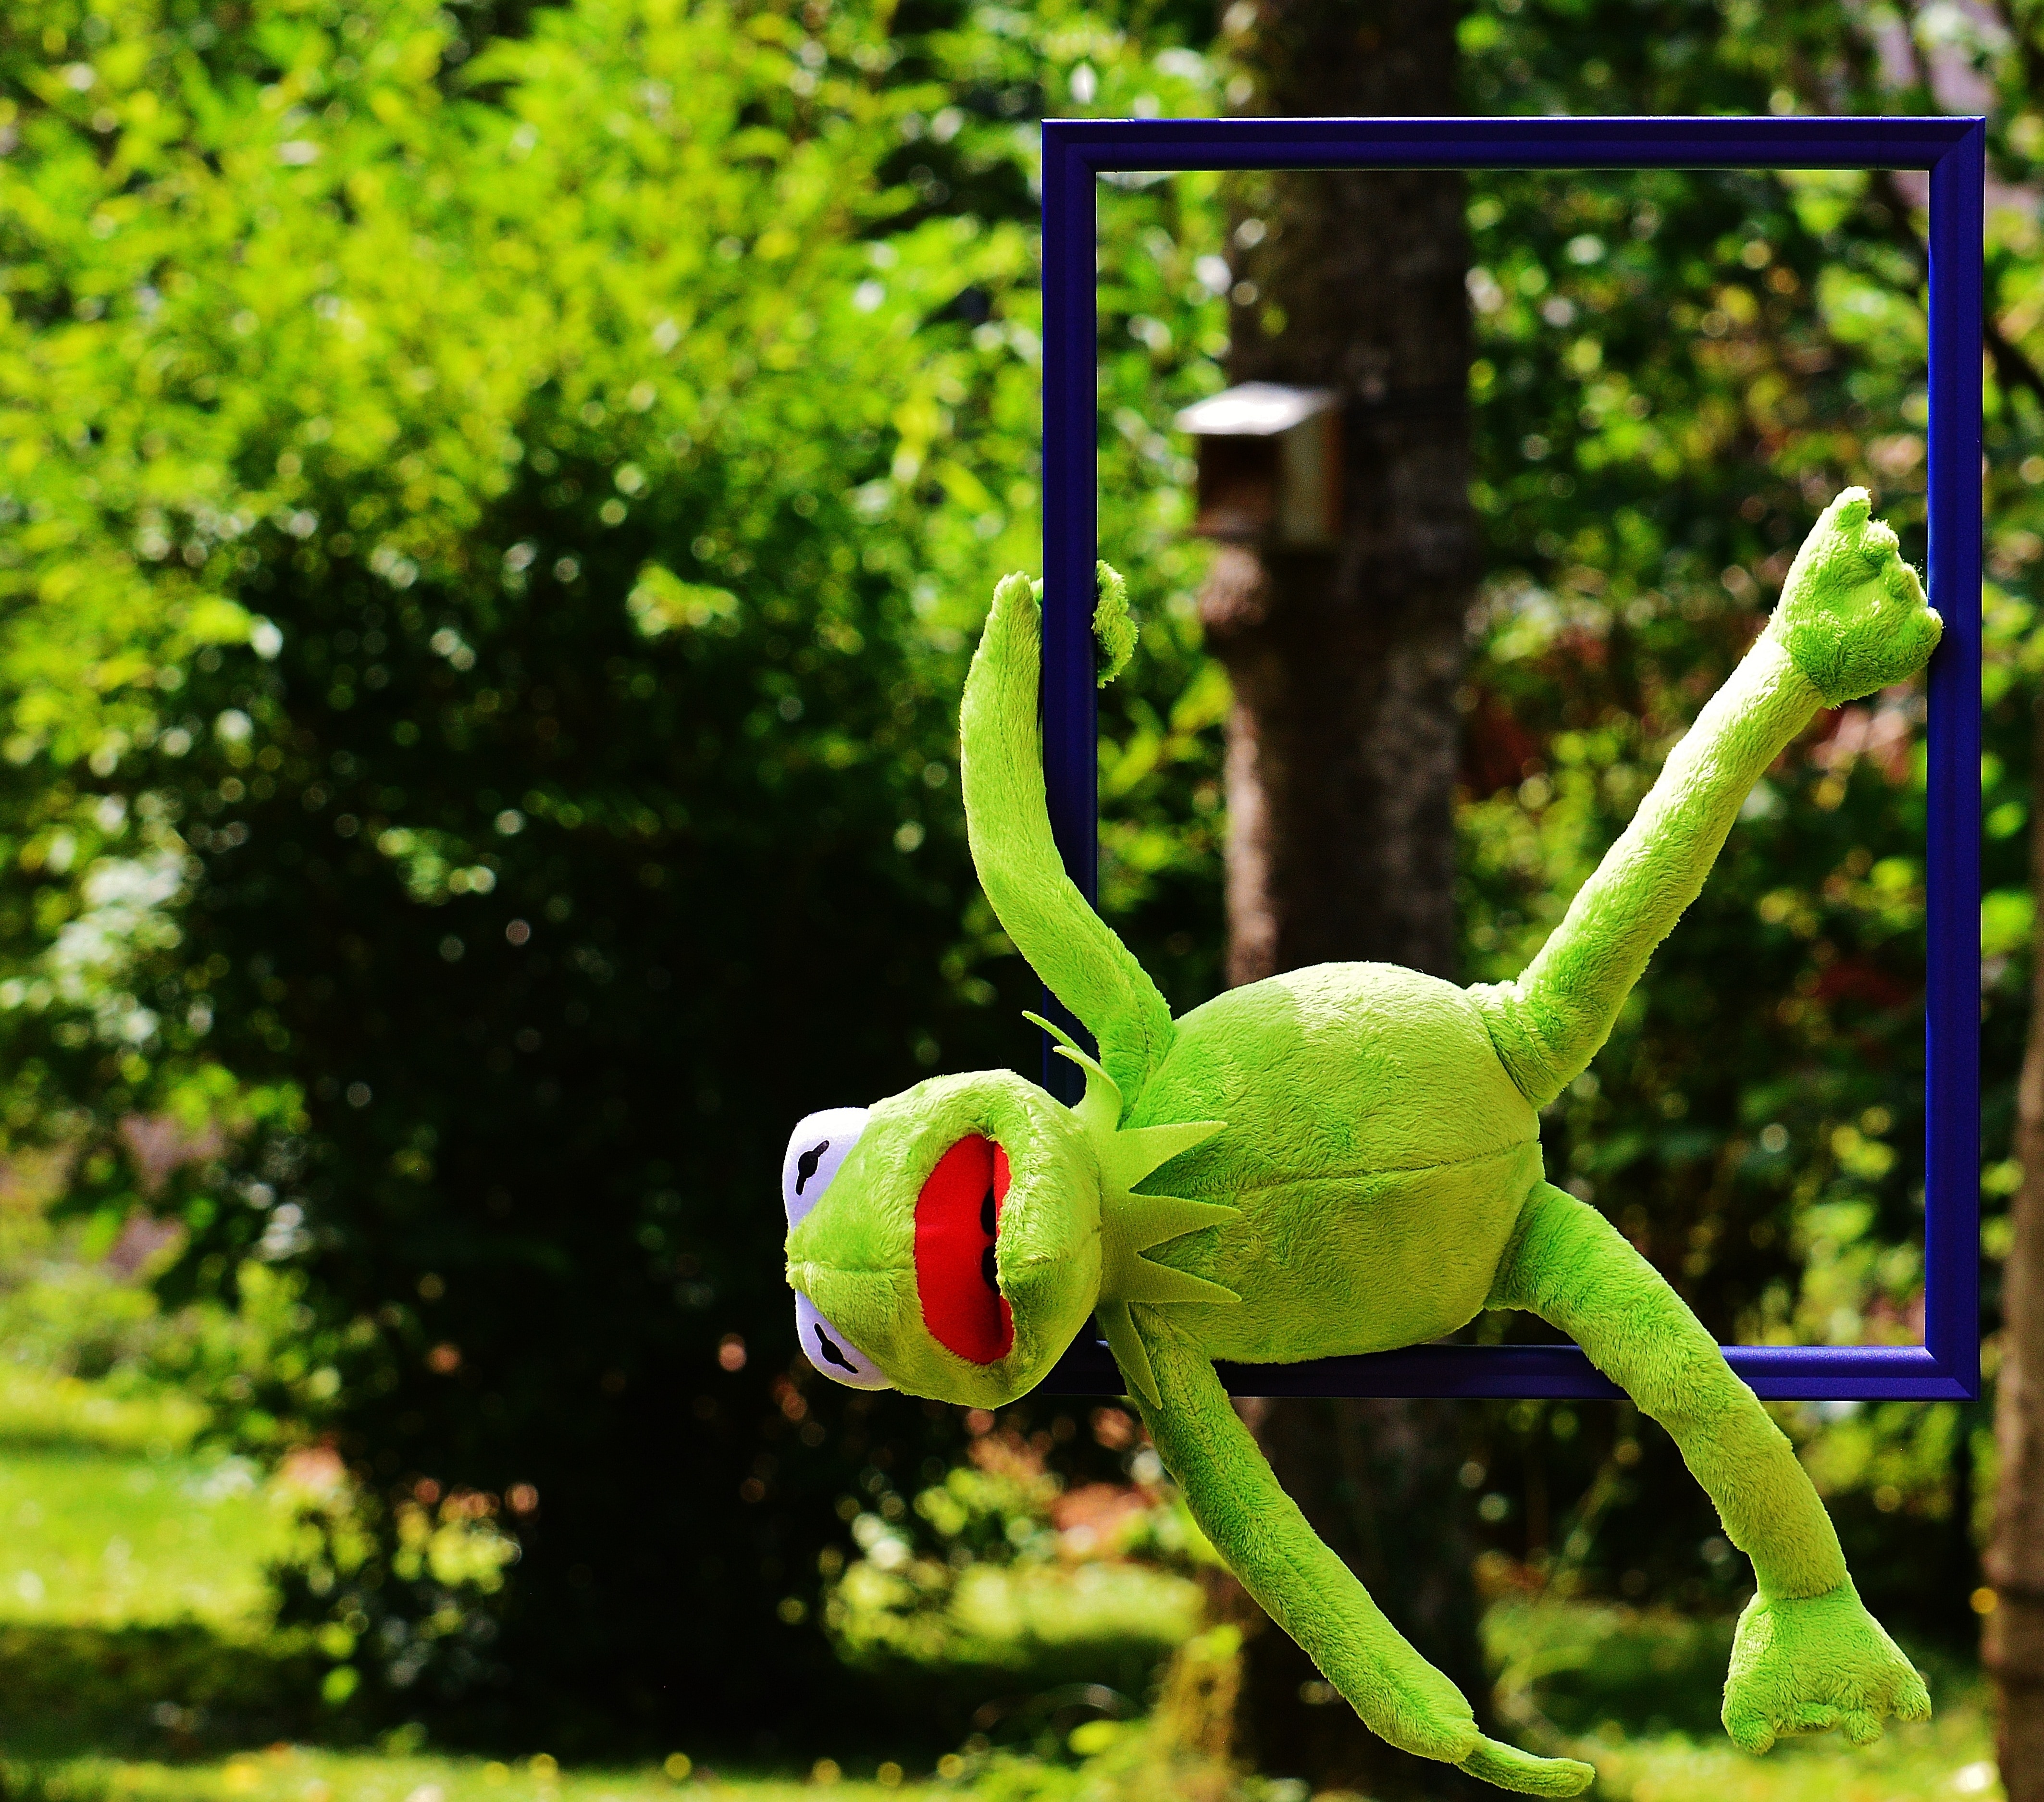 kermit the frog plush toy free image